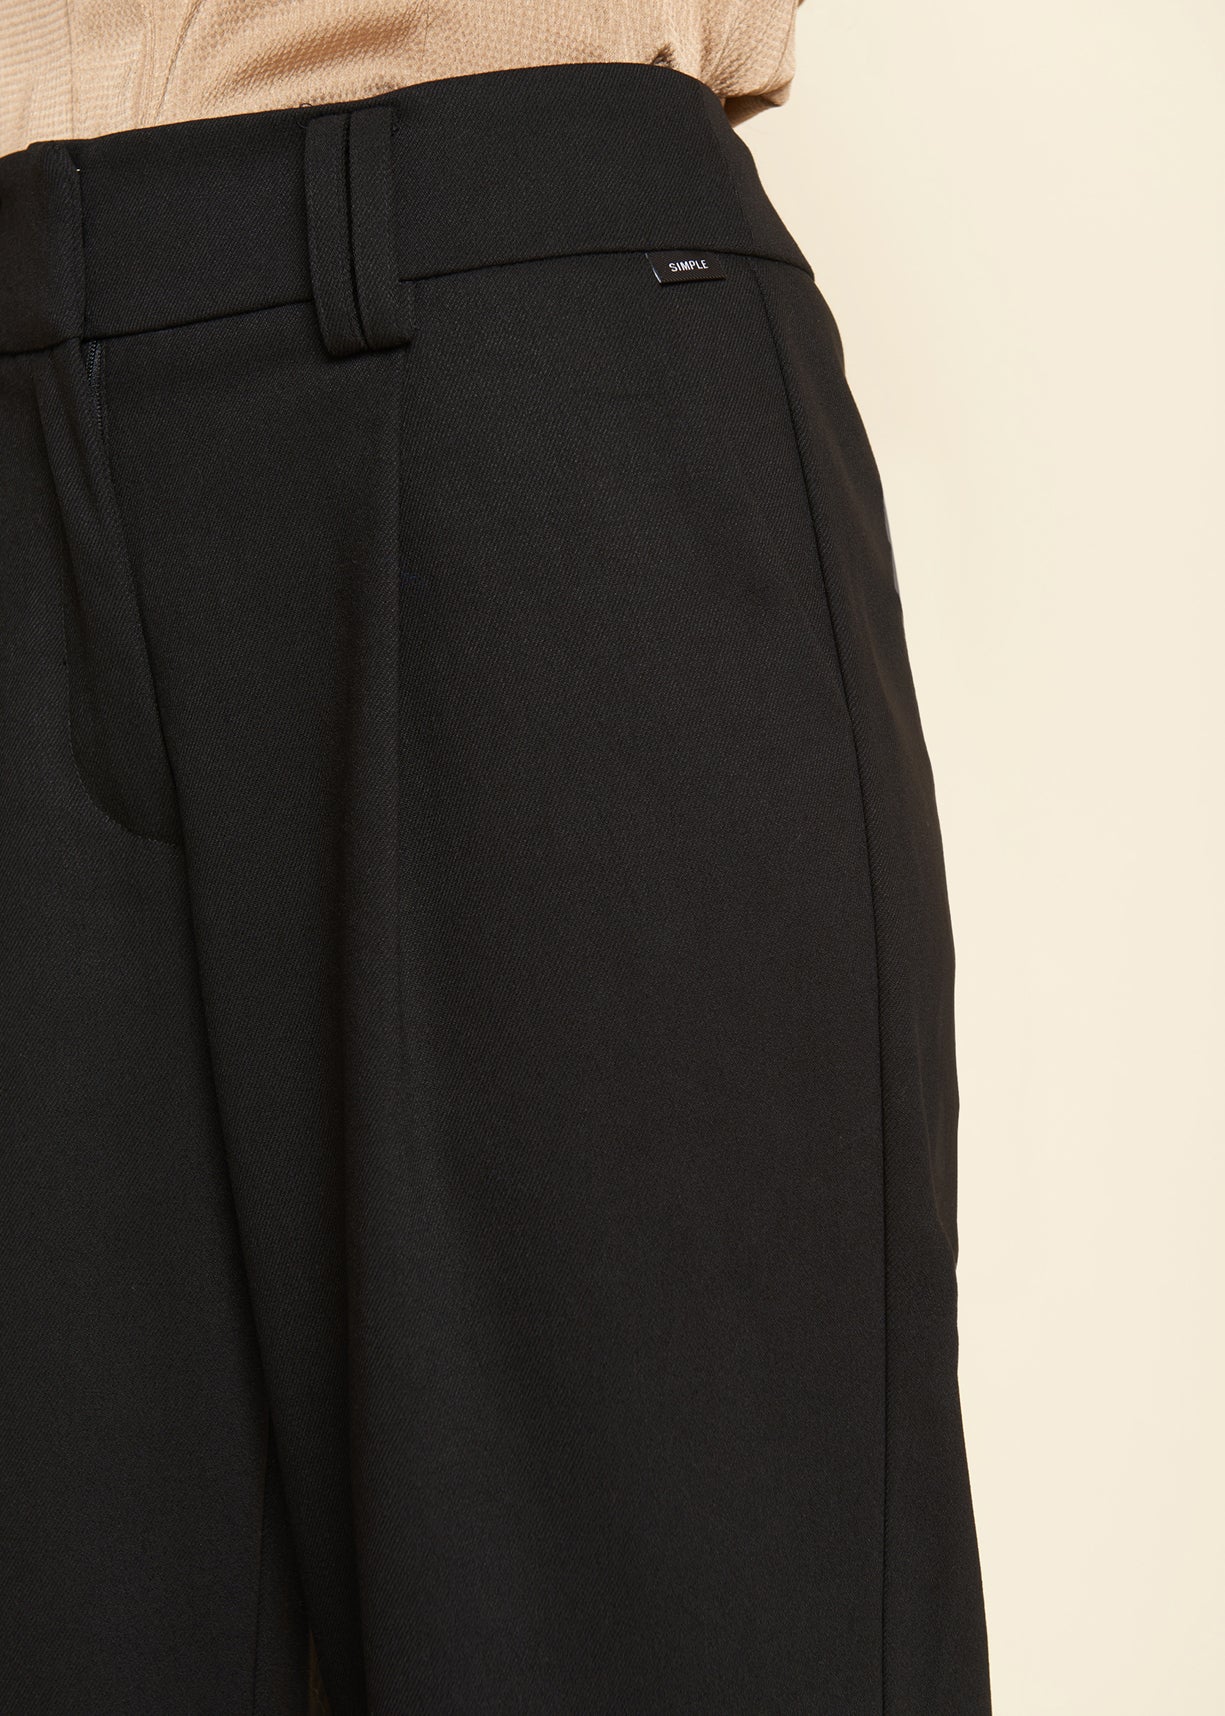 Farah Pants Black Beauty – Simple the Brand